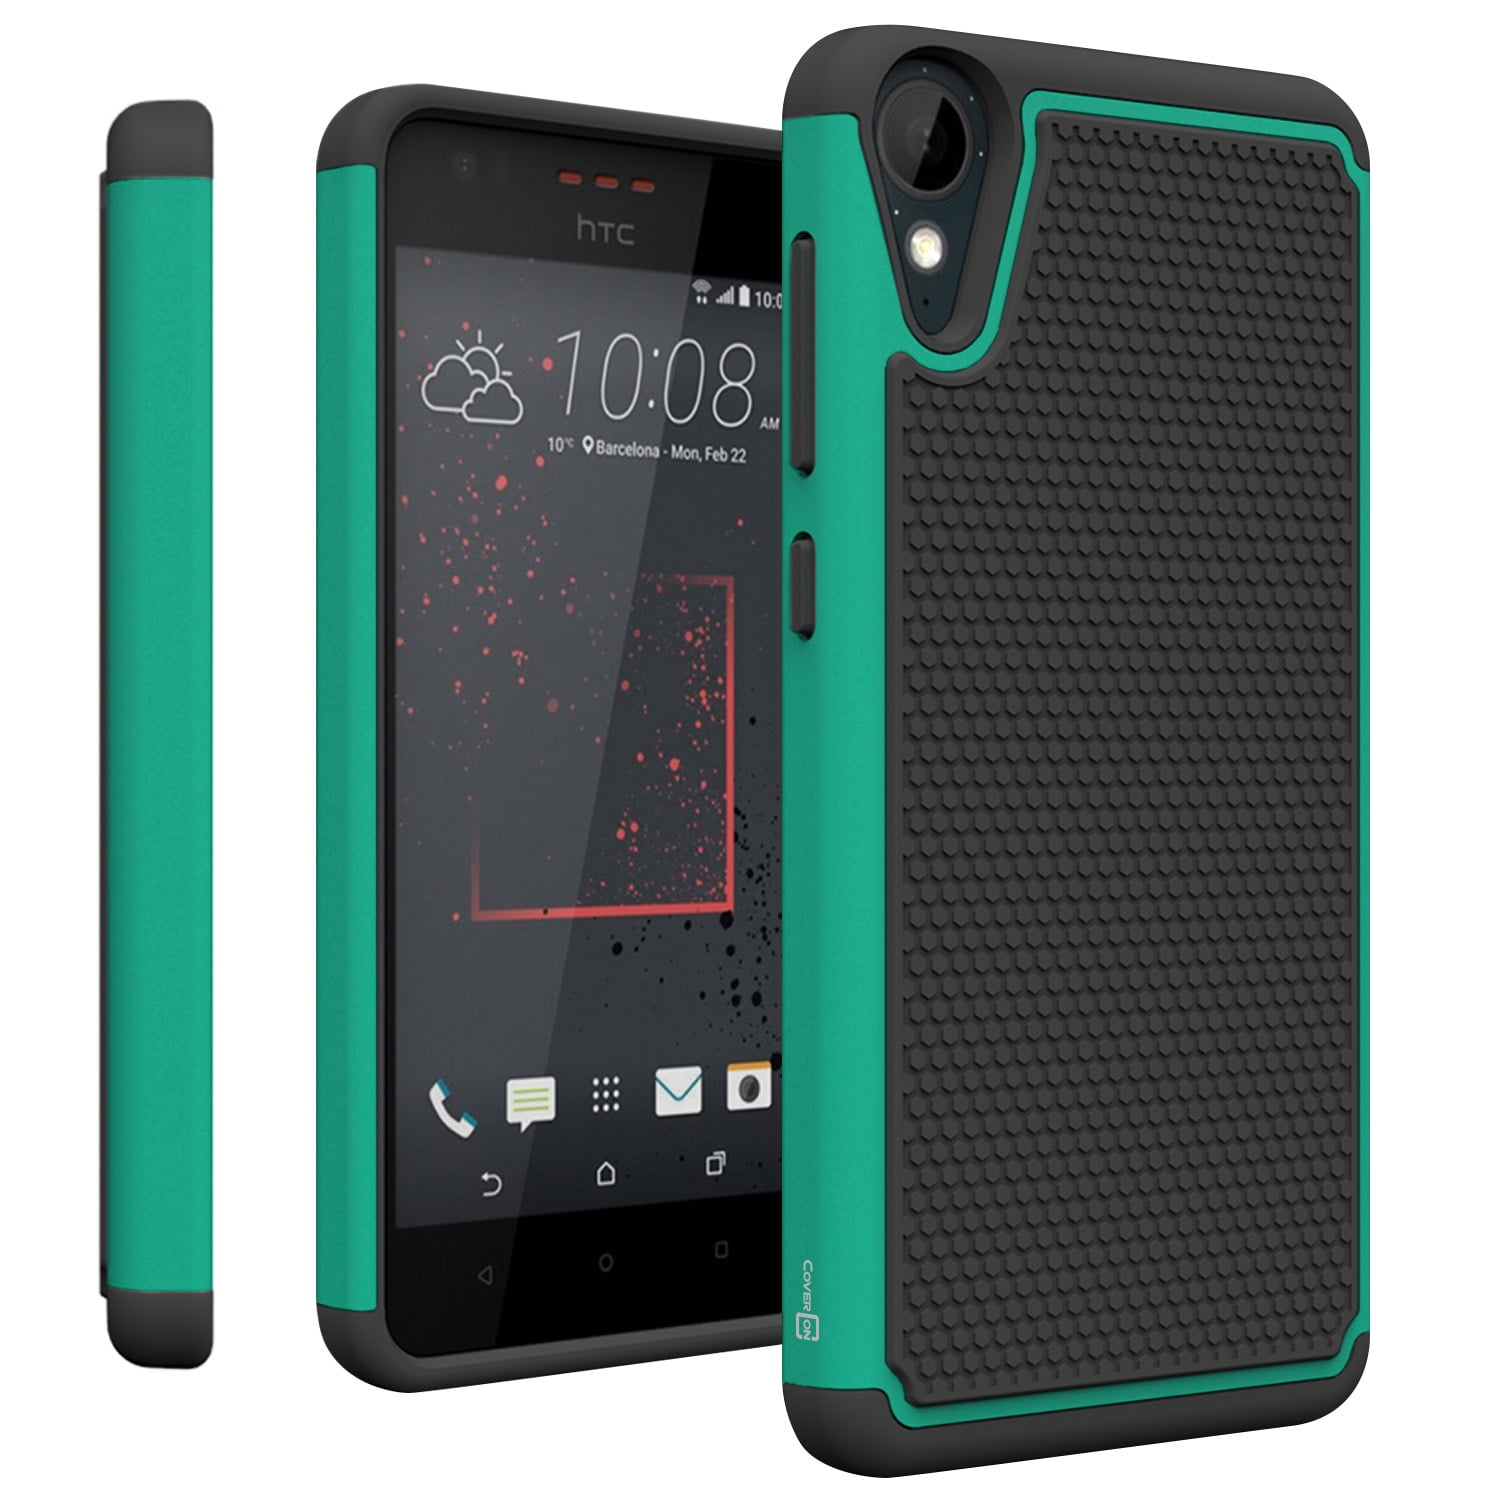 Portiek amplitude Aanleg CoverON HTC Desire 825 Case, HexaGuard Series Hard Phone Cover - Walmart.com